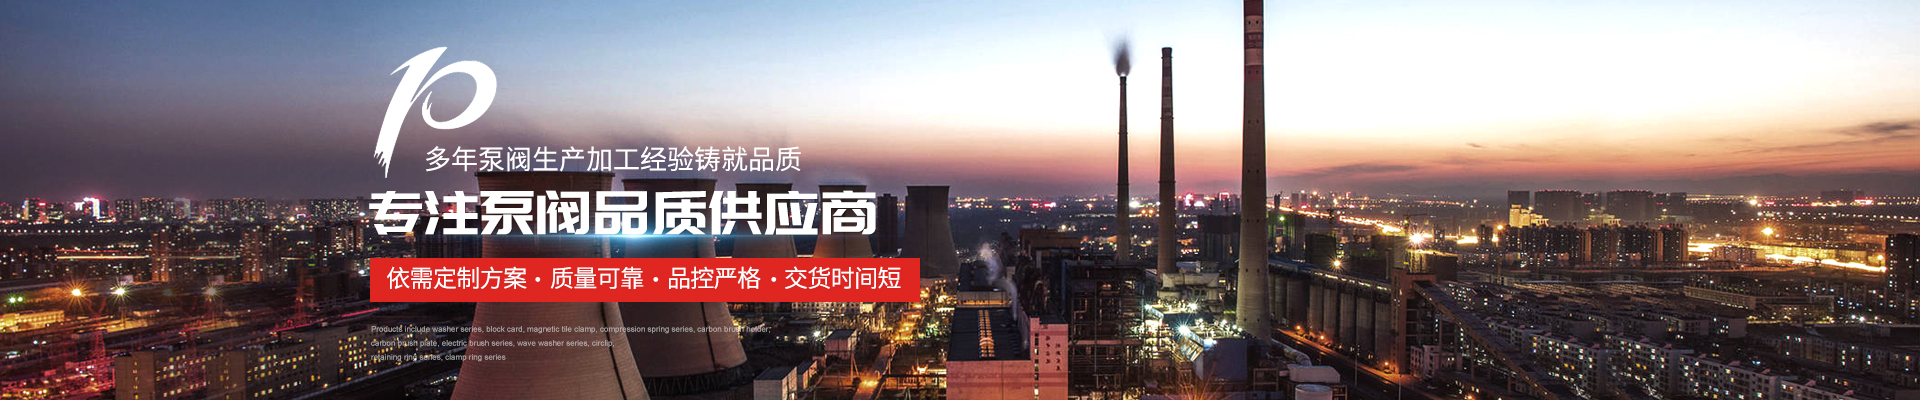 3CF消防柜廠家價格實惠 - 上海高適泵閥有限公司